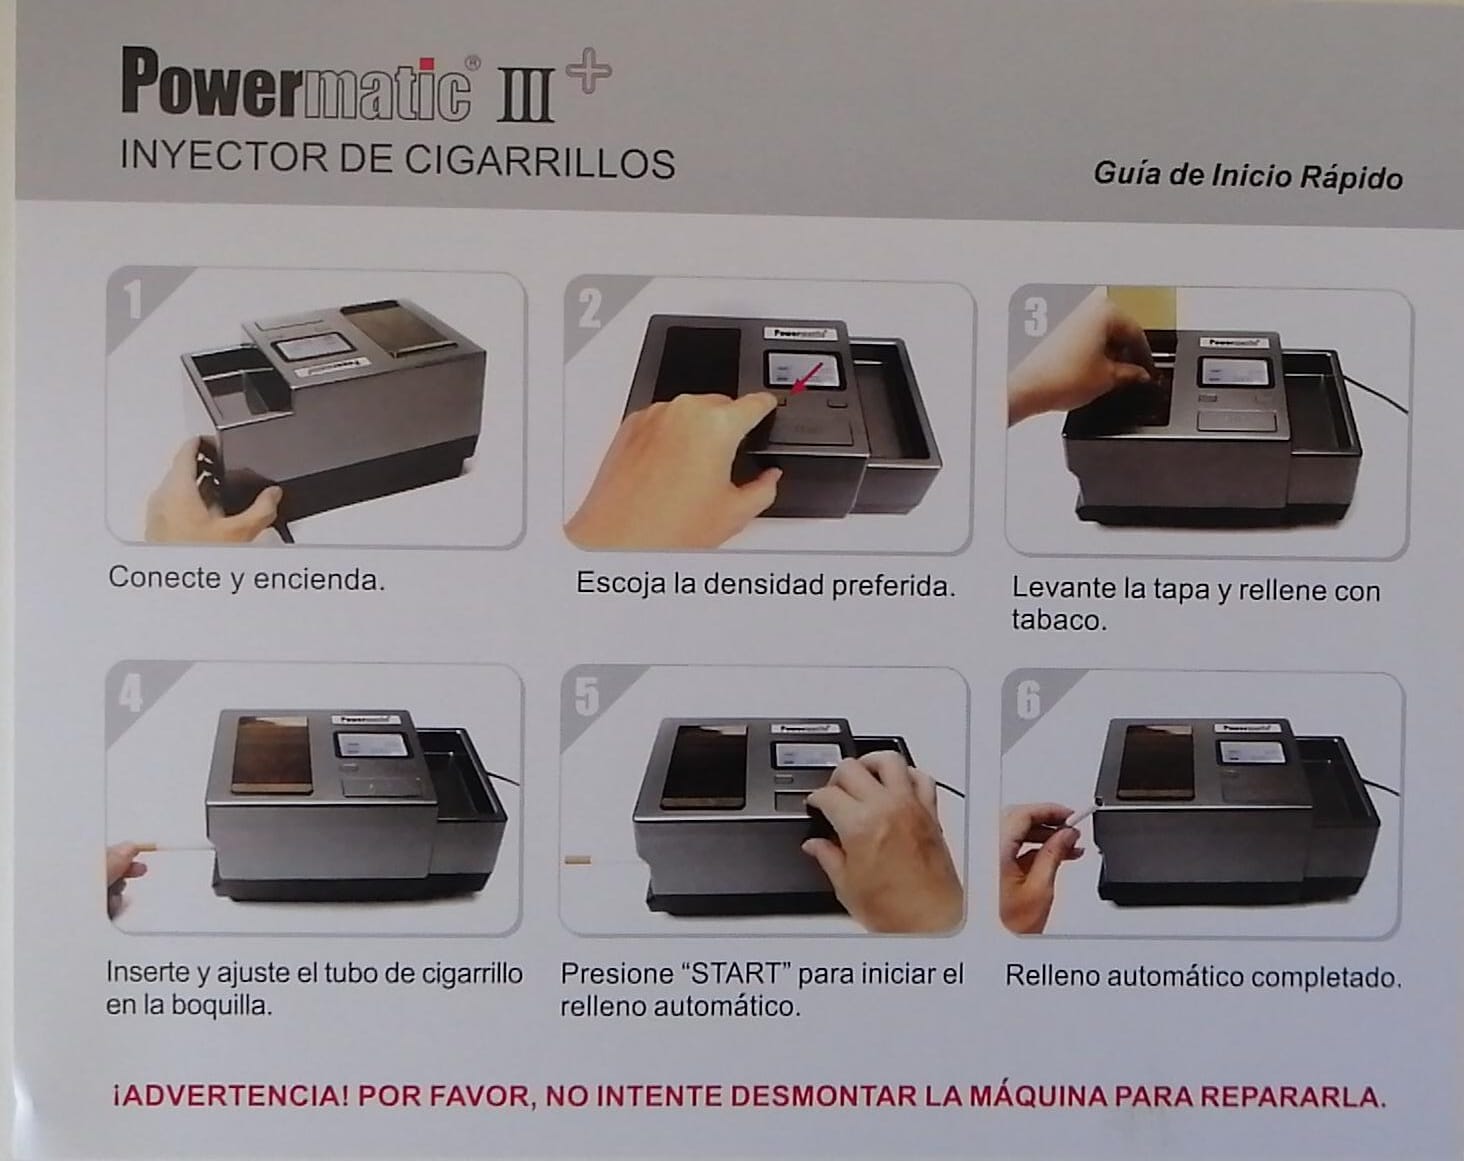 Milanuncios - Powermatic 3 Plus Maquina de entubar